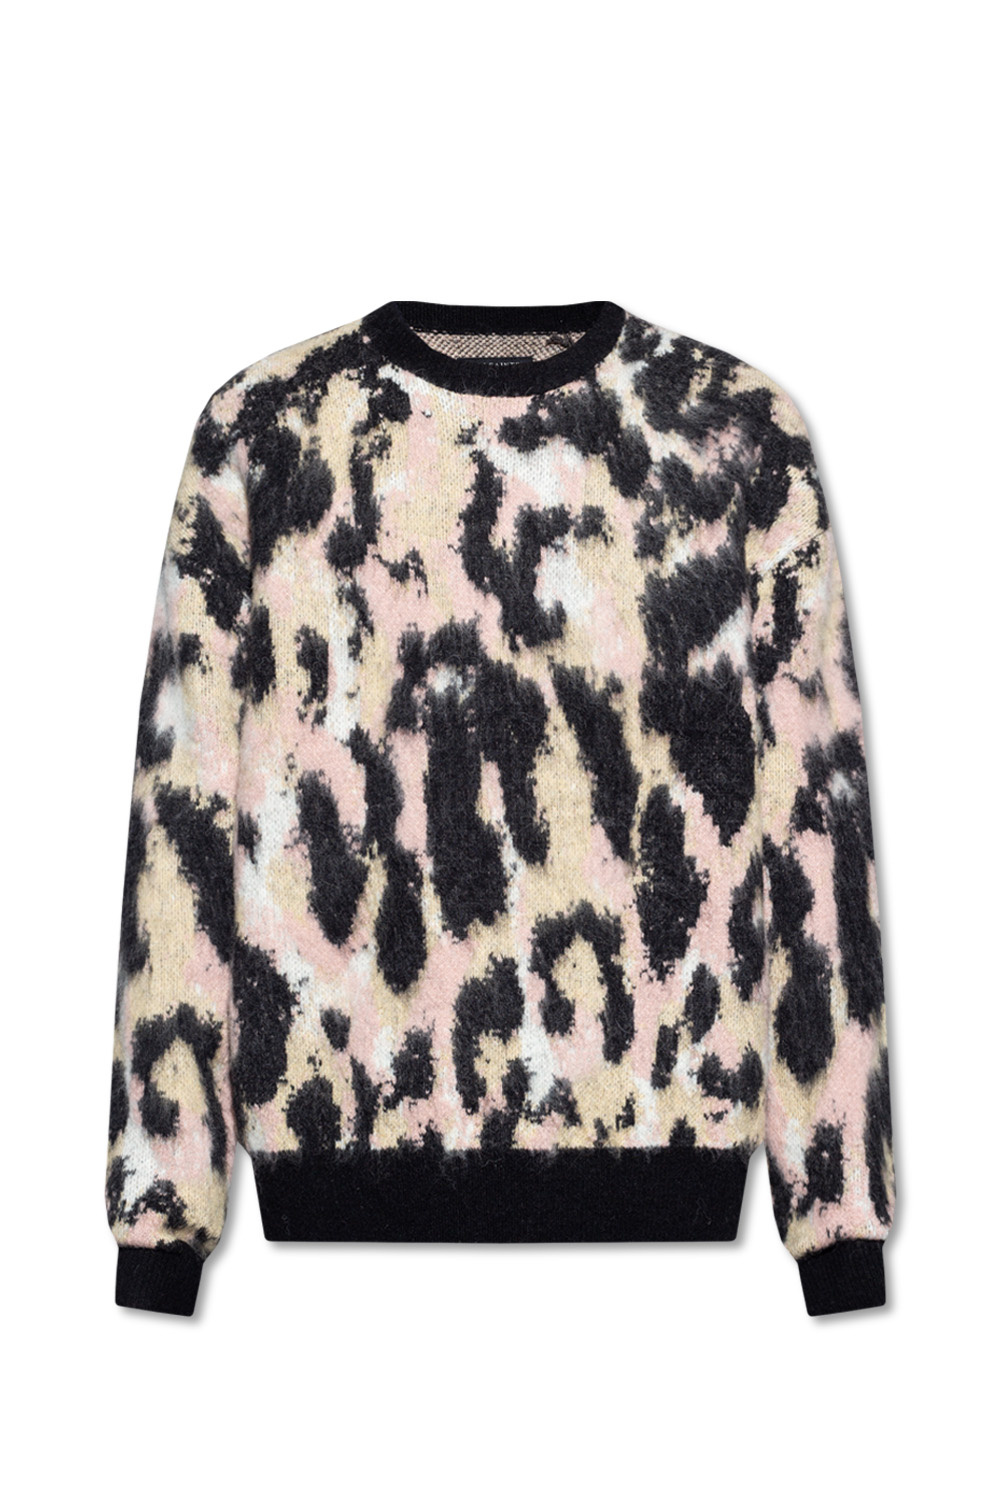 AllSaints ‘Lunar’ patterned sweater